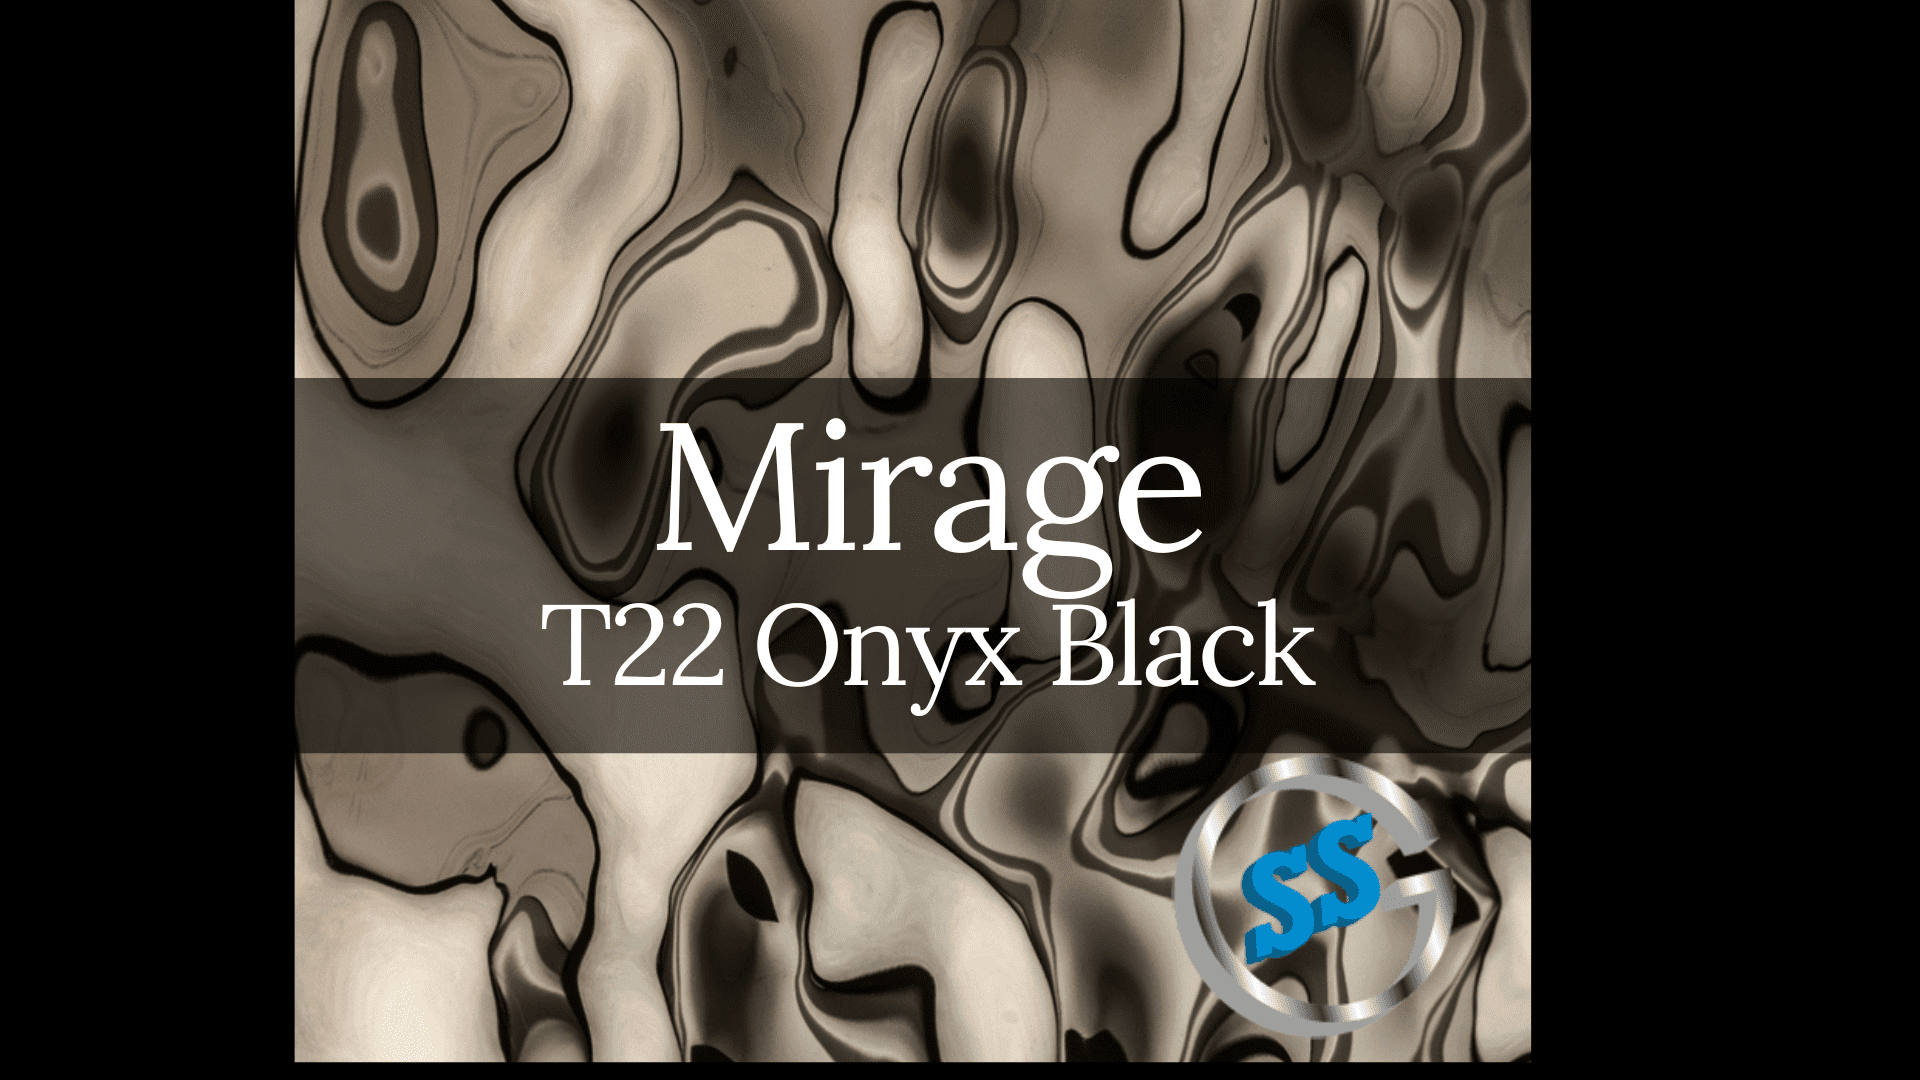 Acciaio inox Water Rhythm Mirage BLACK 1